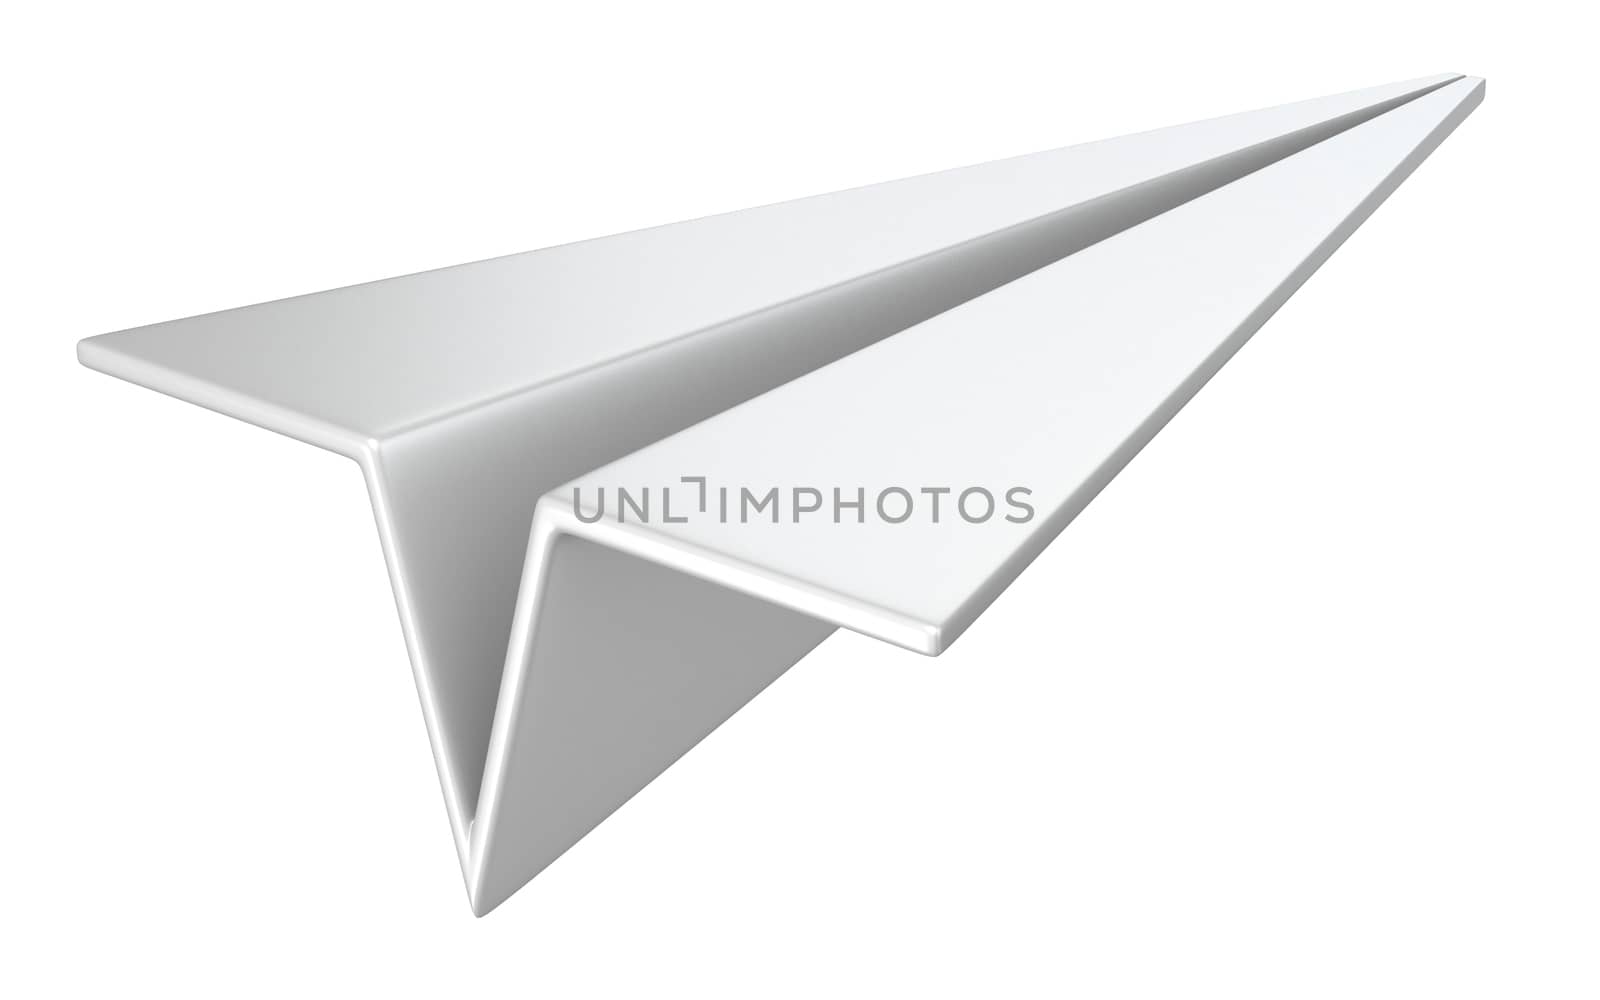 Flying paper plane 3D render illustration isolated on white background